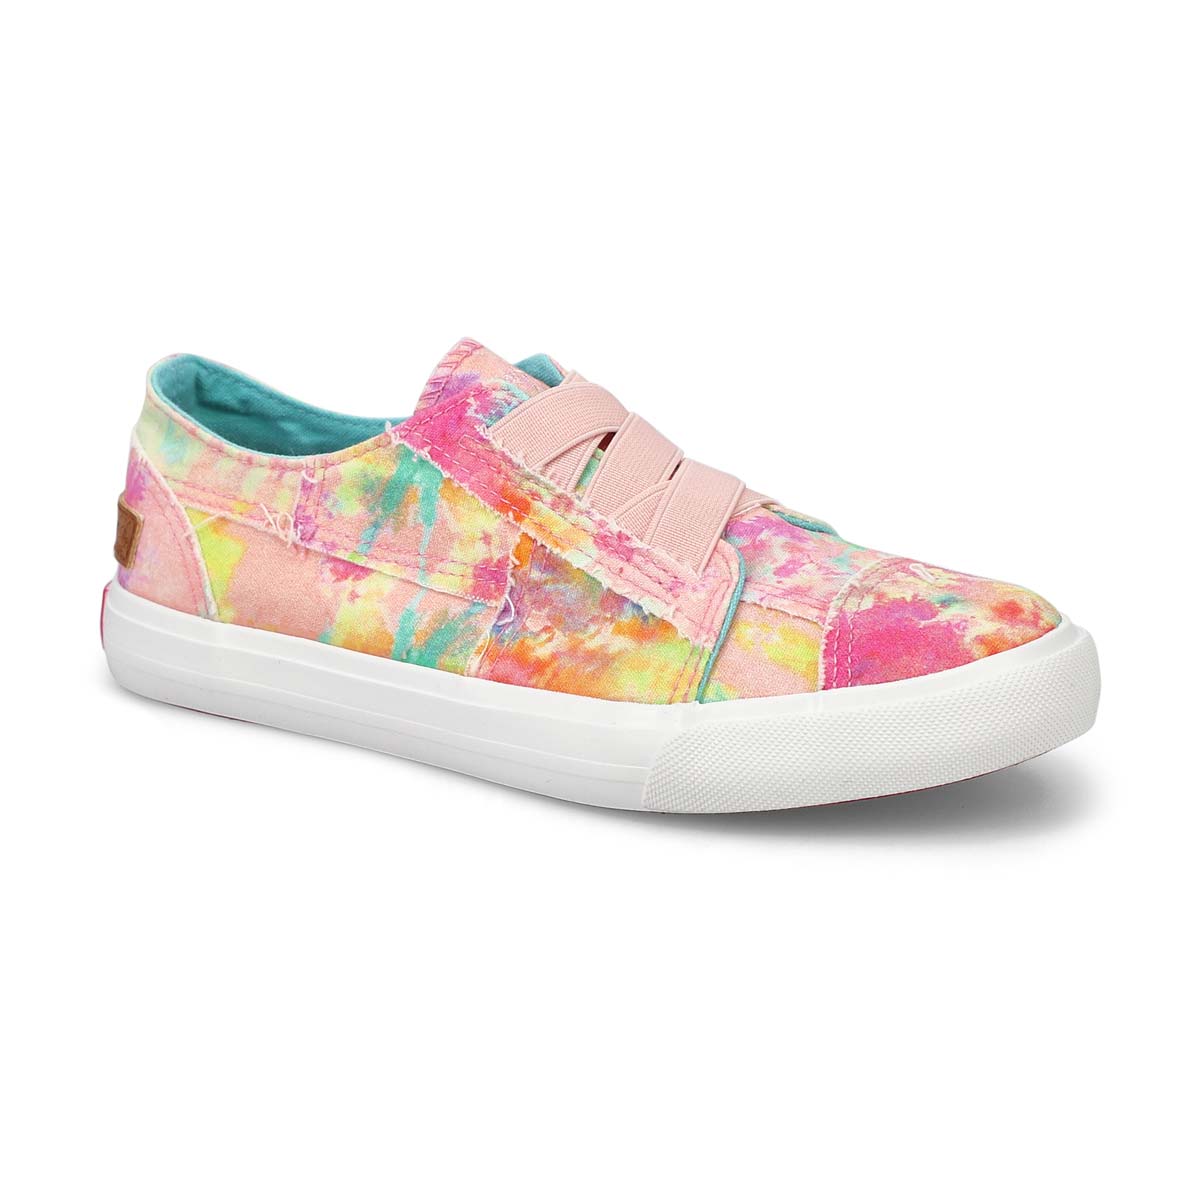 Blowfish Malibu Girls' Marley Sneakers - Pink | SoftMoc.com